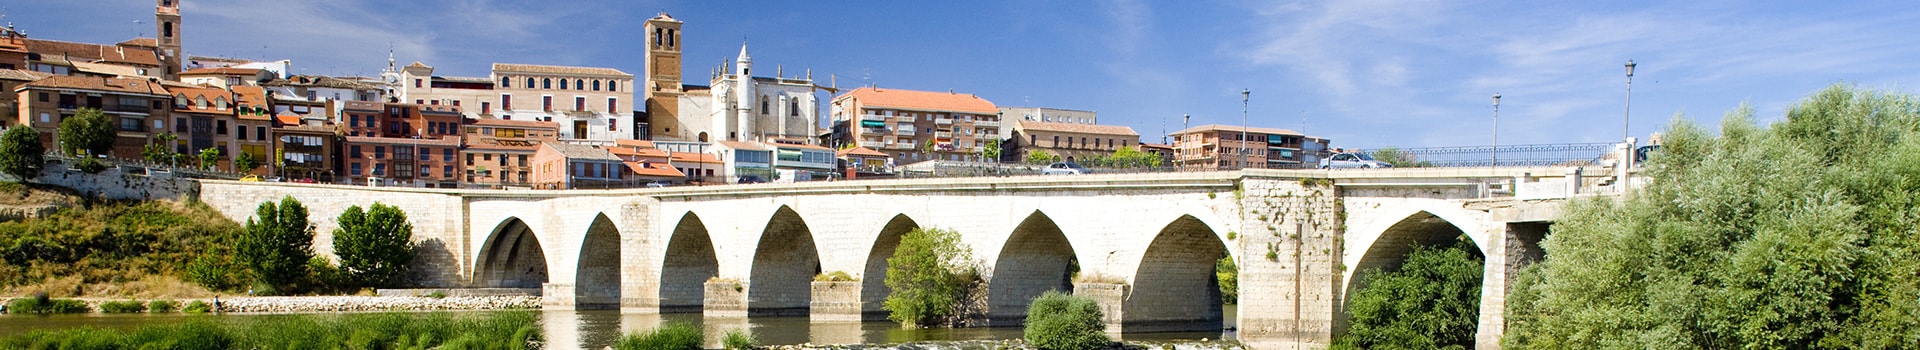 Reus - Valladolid